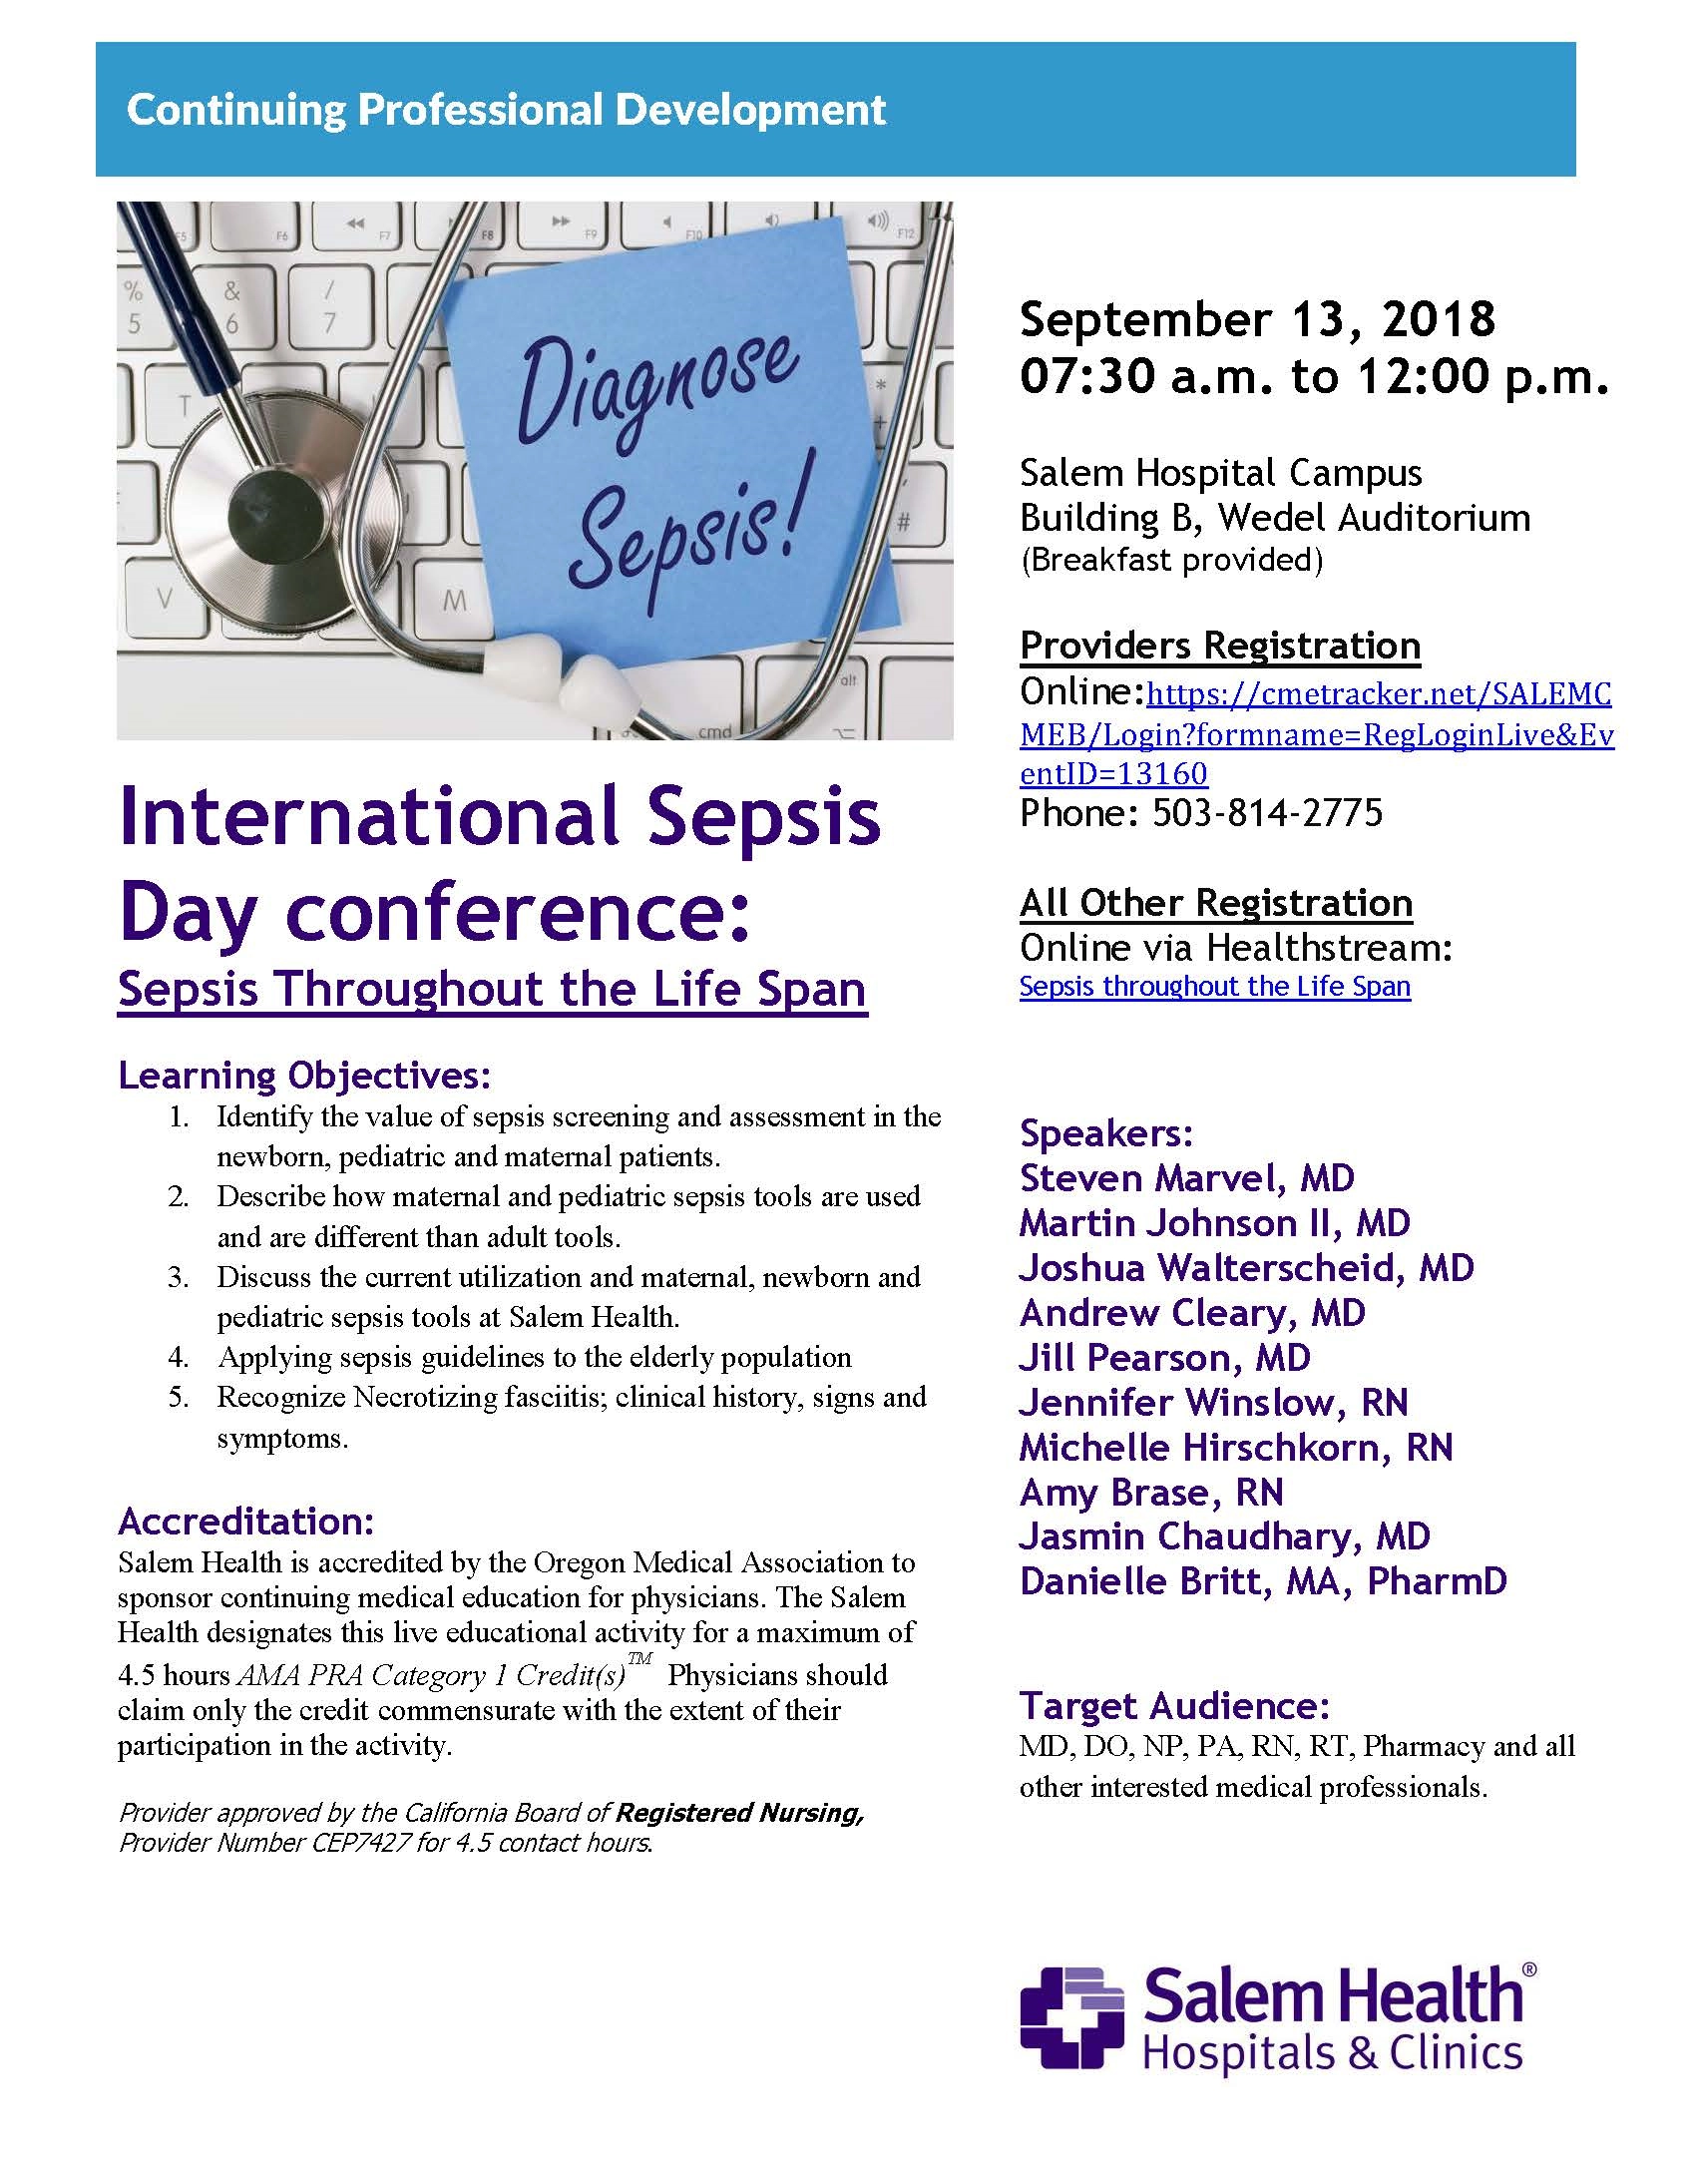 International Sepsis Day flyer